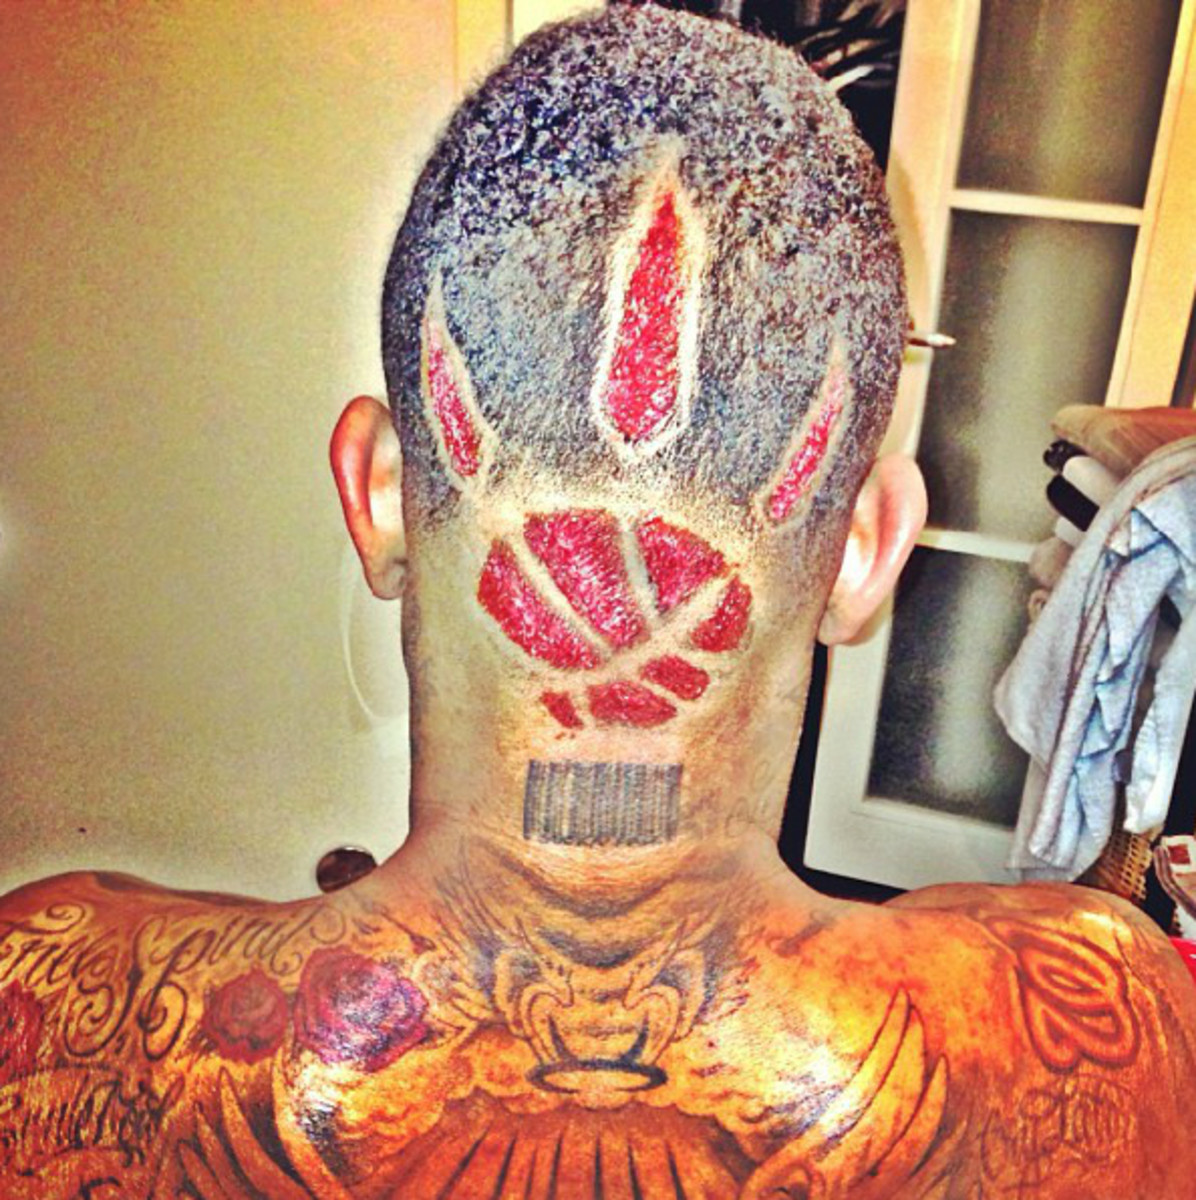 Raptors forward Amir Johnson got the team's logo shaved into his hair. (@IAmAmirJohnson)